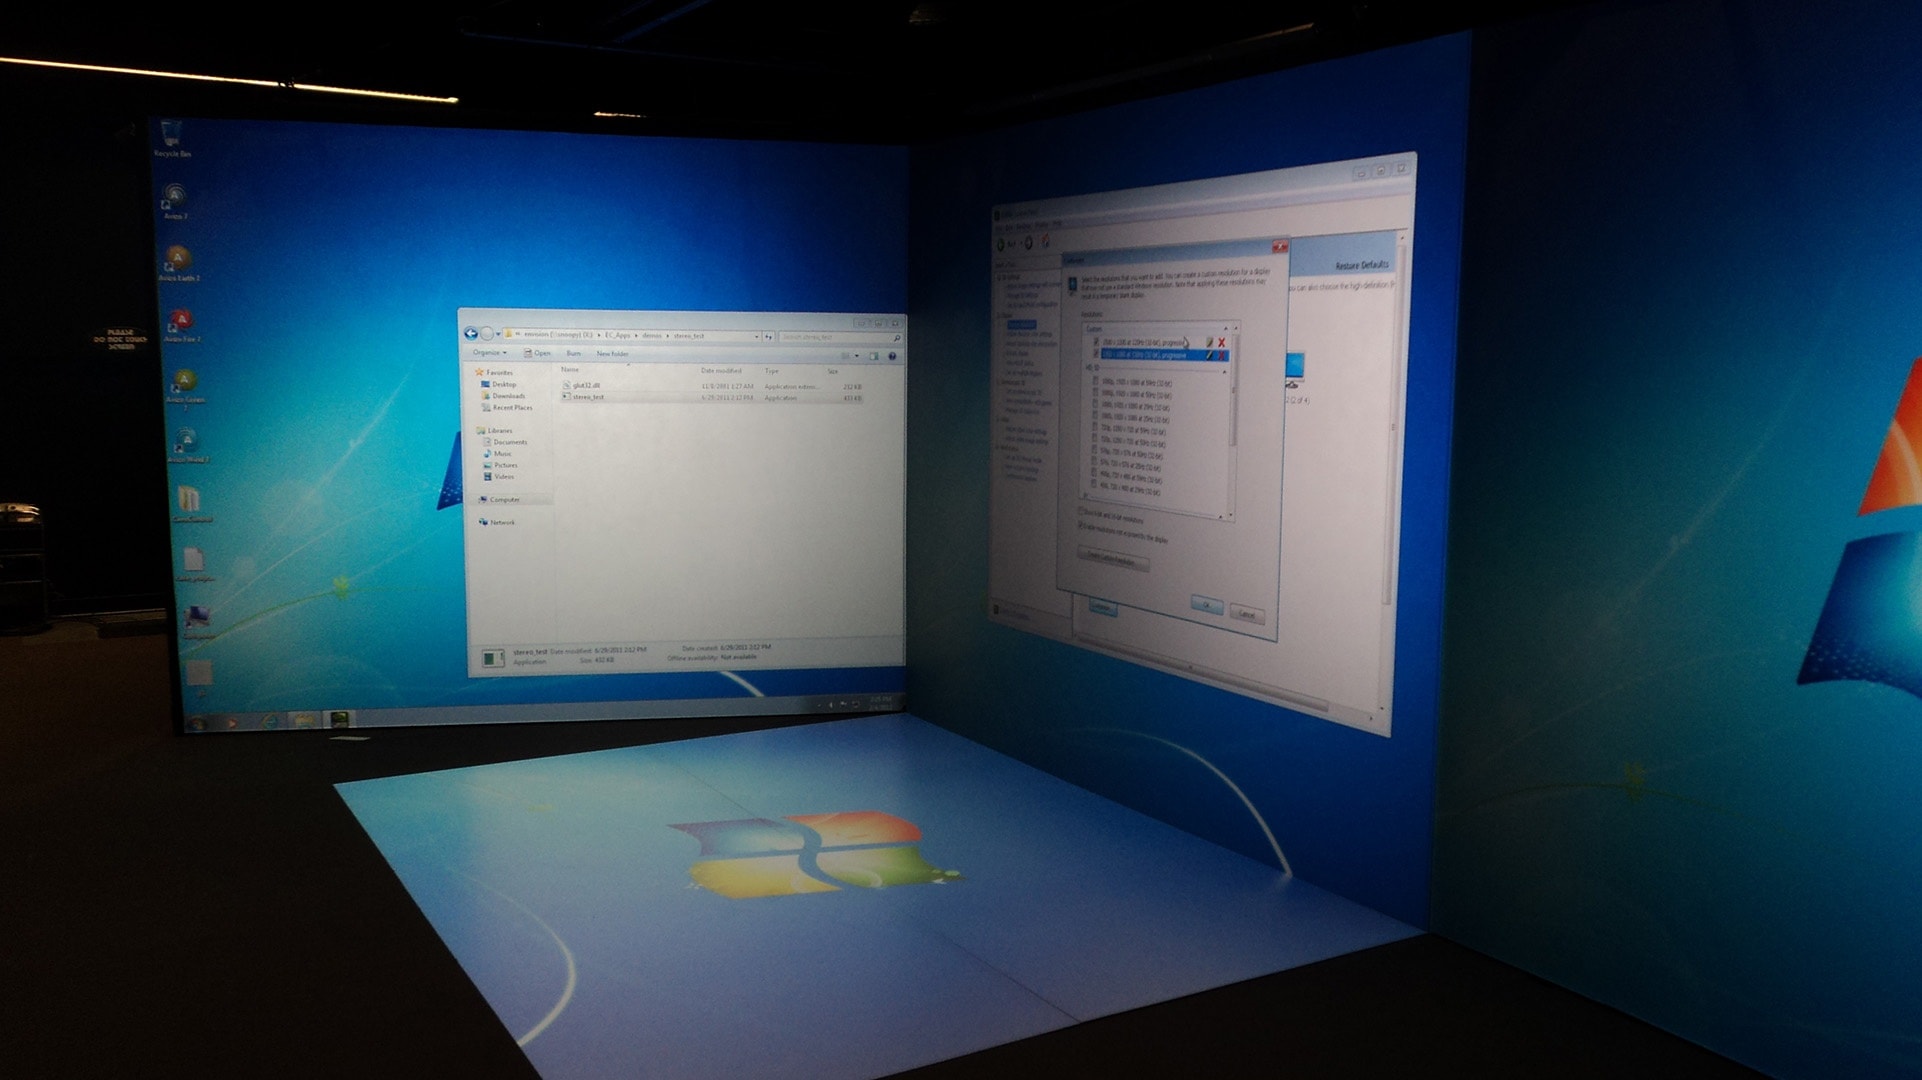 IGI flex VR Room system Microsoft OS large HD screen projection